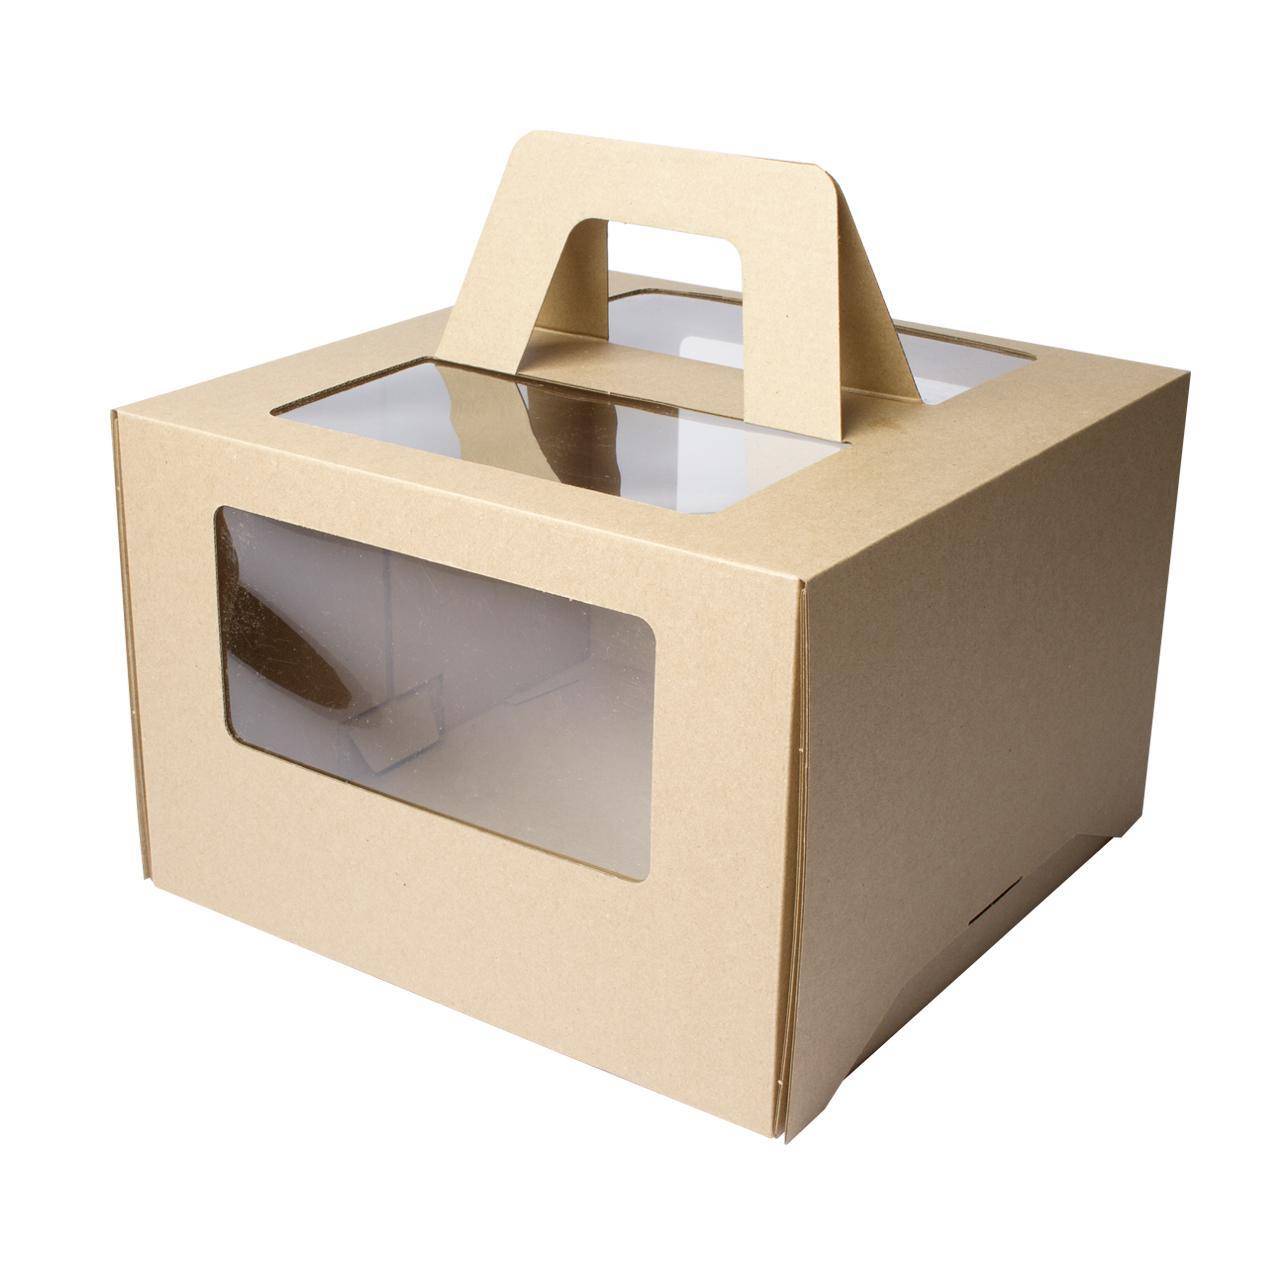 Производитель коробок для тортов. Коробка 26 26 20 с ручками с тортом. Коробка для торта с ручками 24x24x20 см. Коробка для торта 28 28 28. Коробка для торта с ручками белая 30х30х20 см.